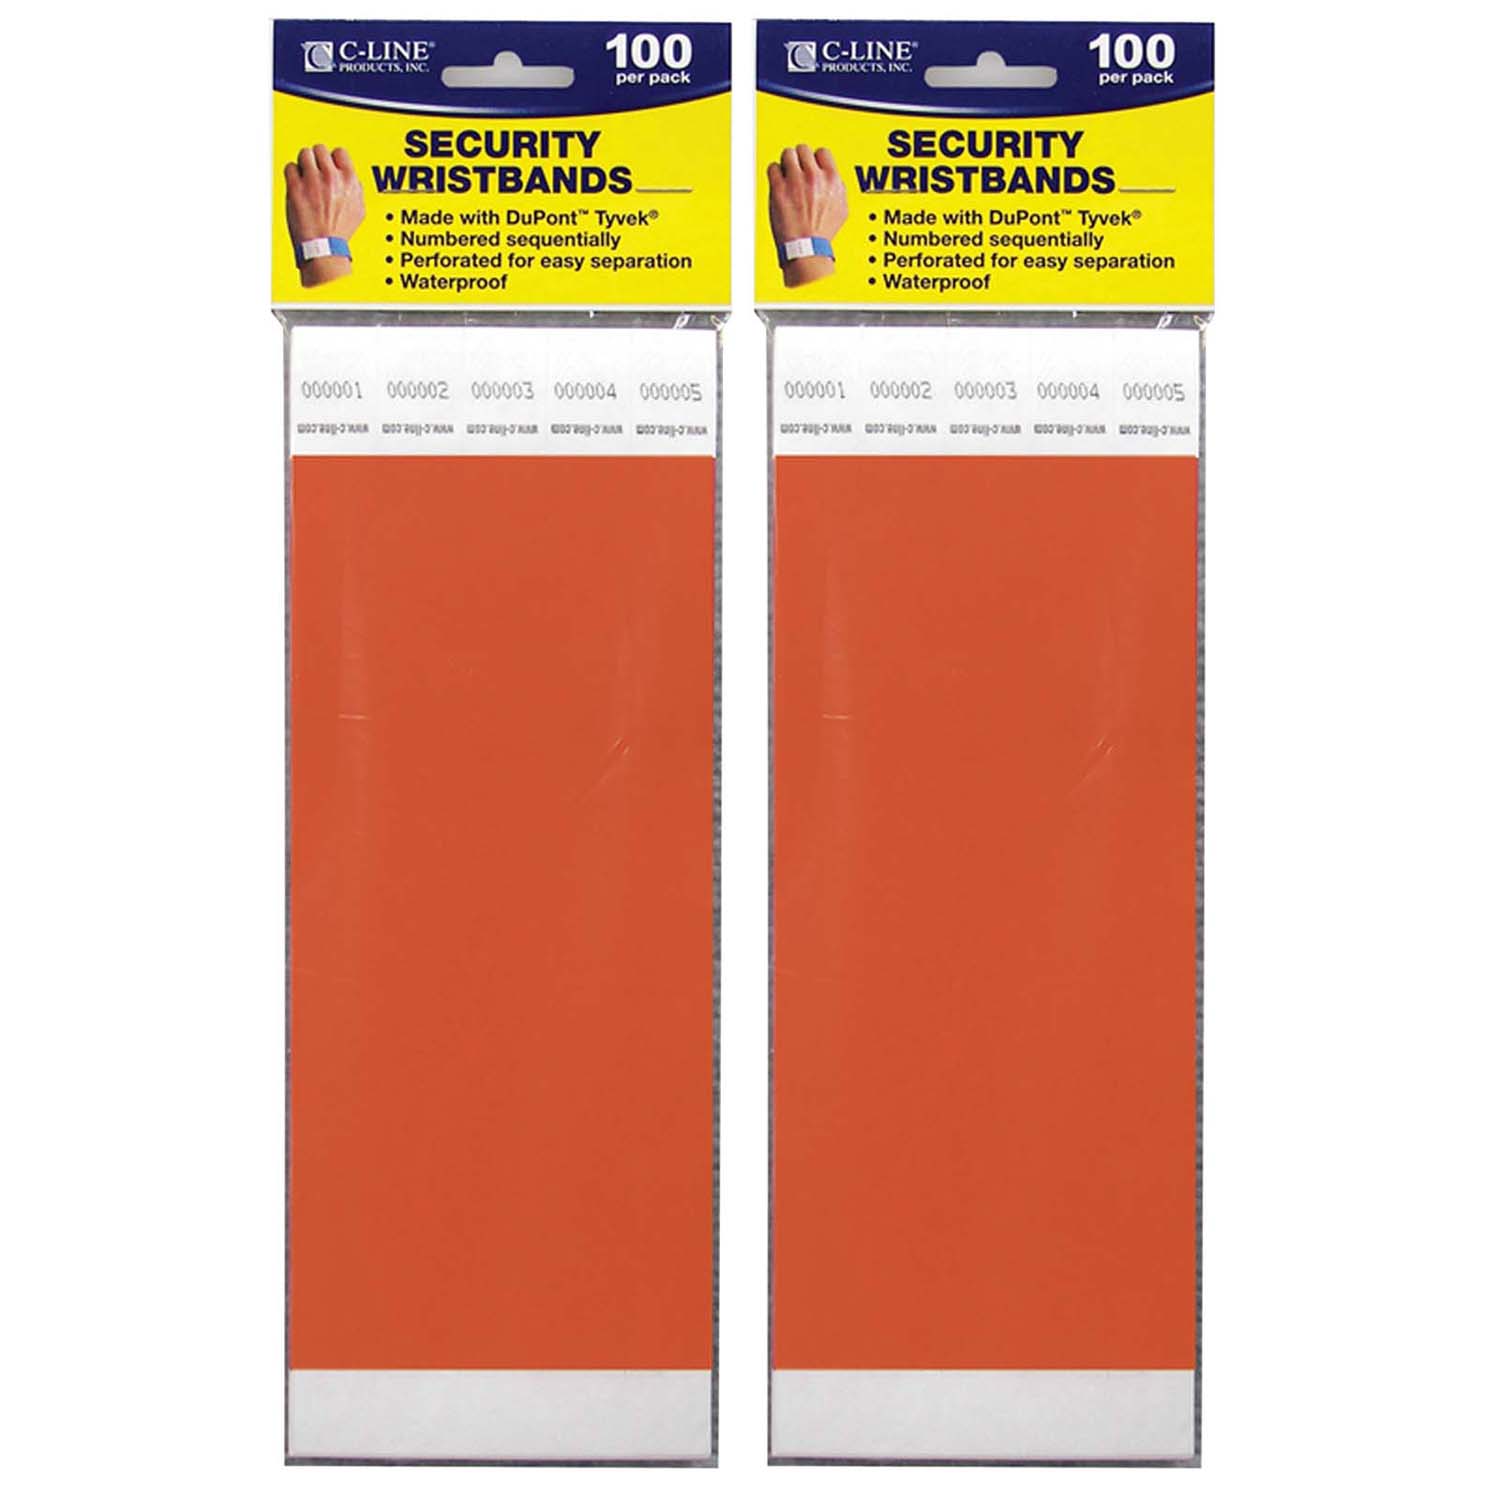 DuPont Tyvek Security Wristbands, Orange, 100 Per Pack, 2 Packs